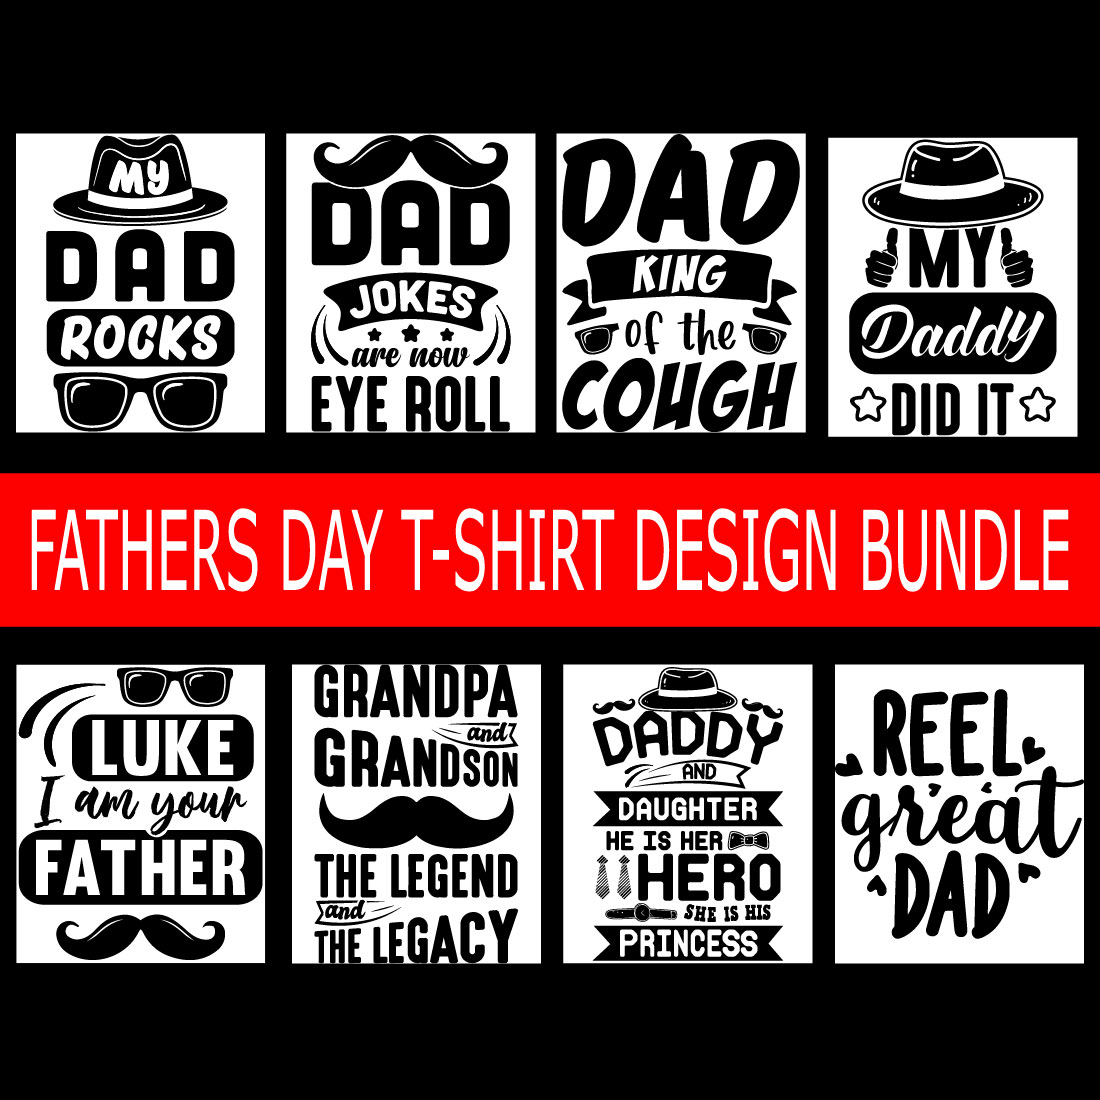 Father's day t - shirt design bundle.